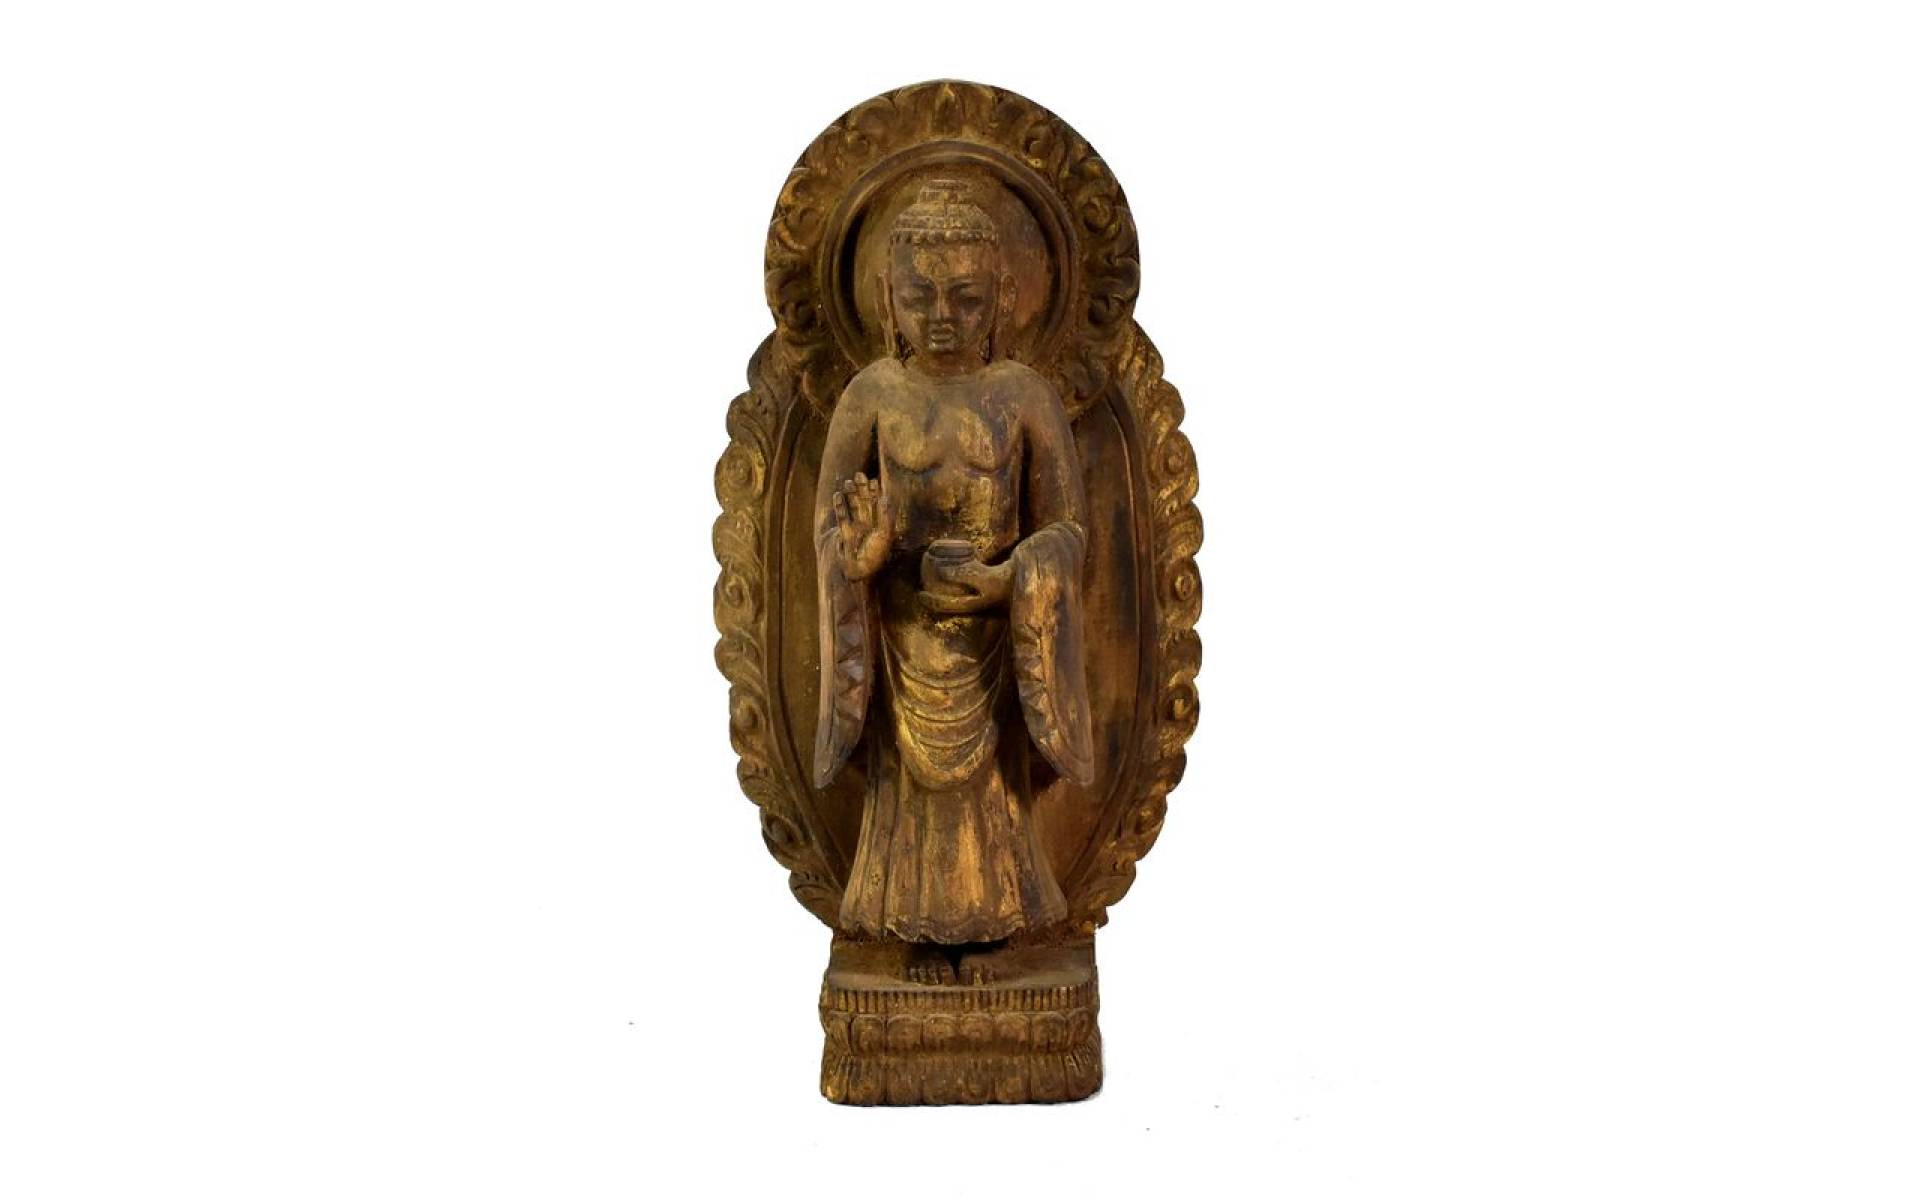 Budha Maitreya, drevená socha, ručné práce, antik úprava, 34cm